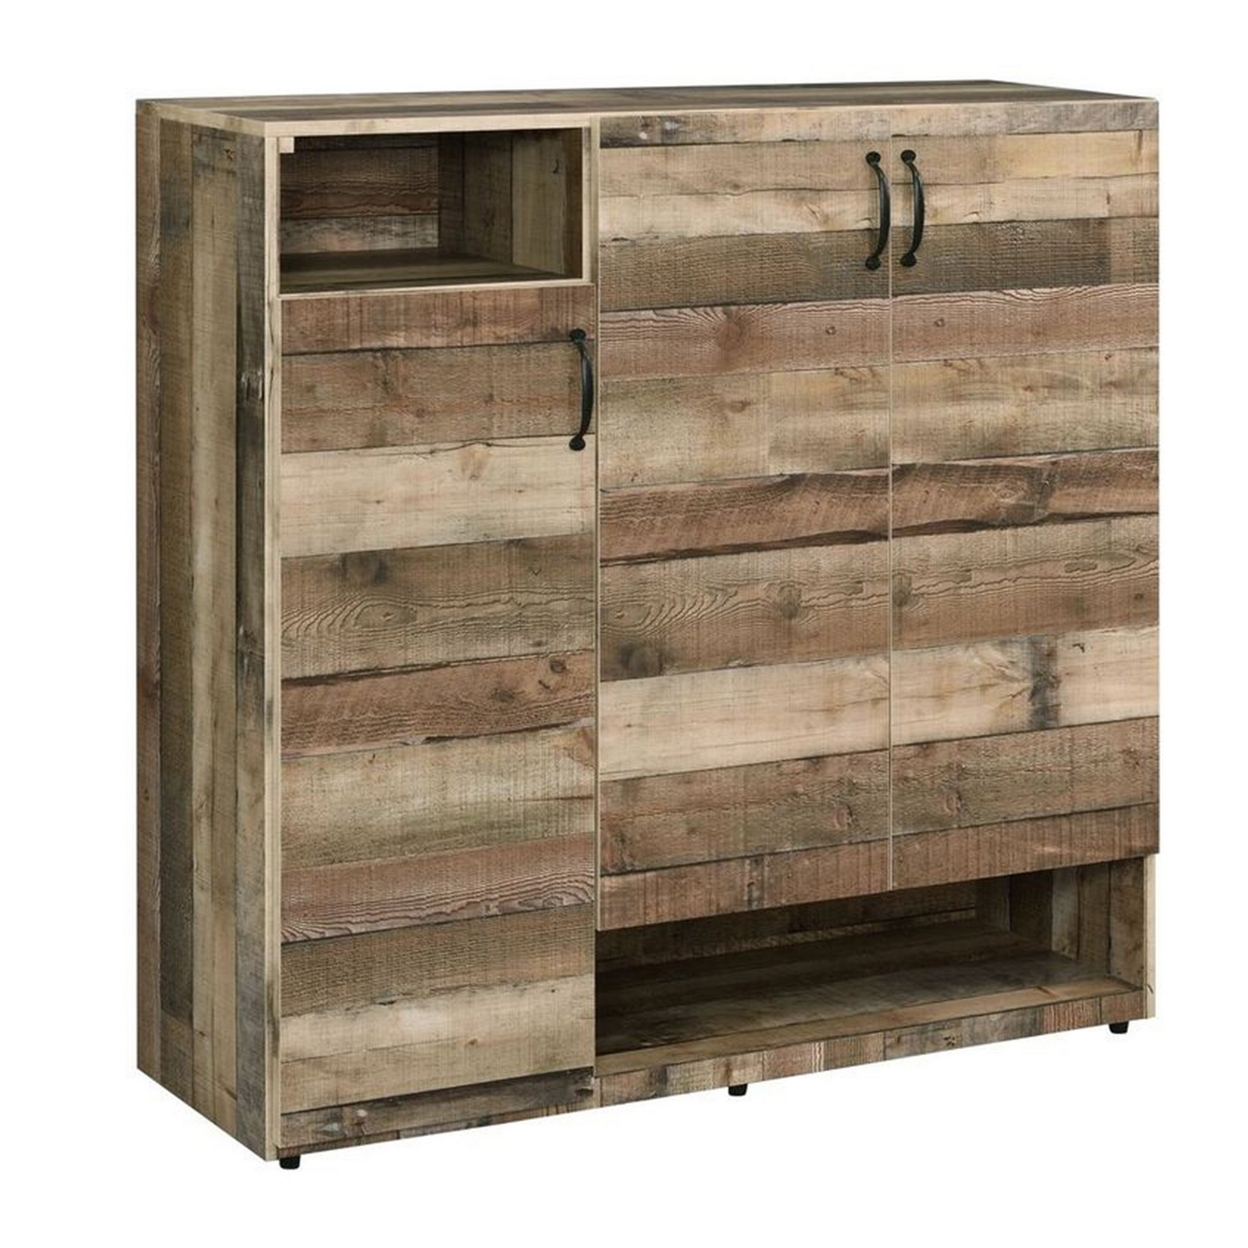 3 Door Wooden Shoe Cabinet With Multiple Storage Compartments, Brown- Saltoro Sherpi